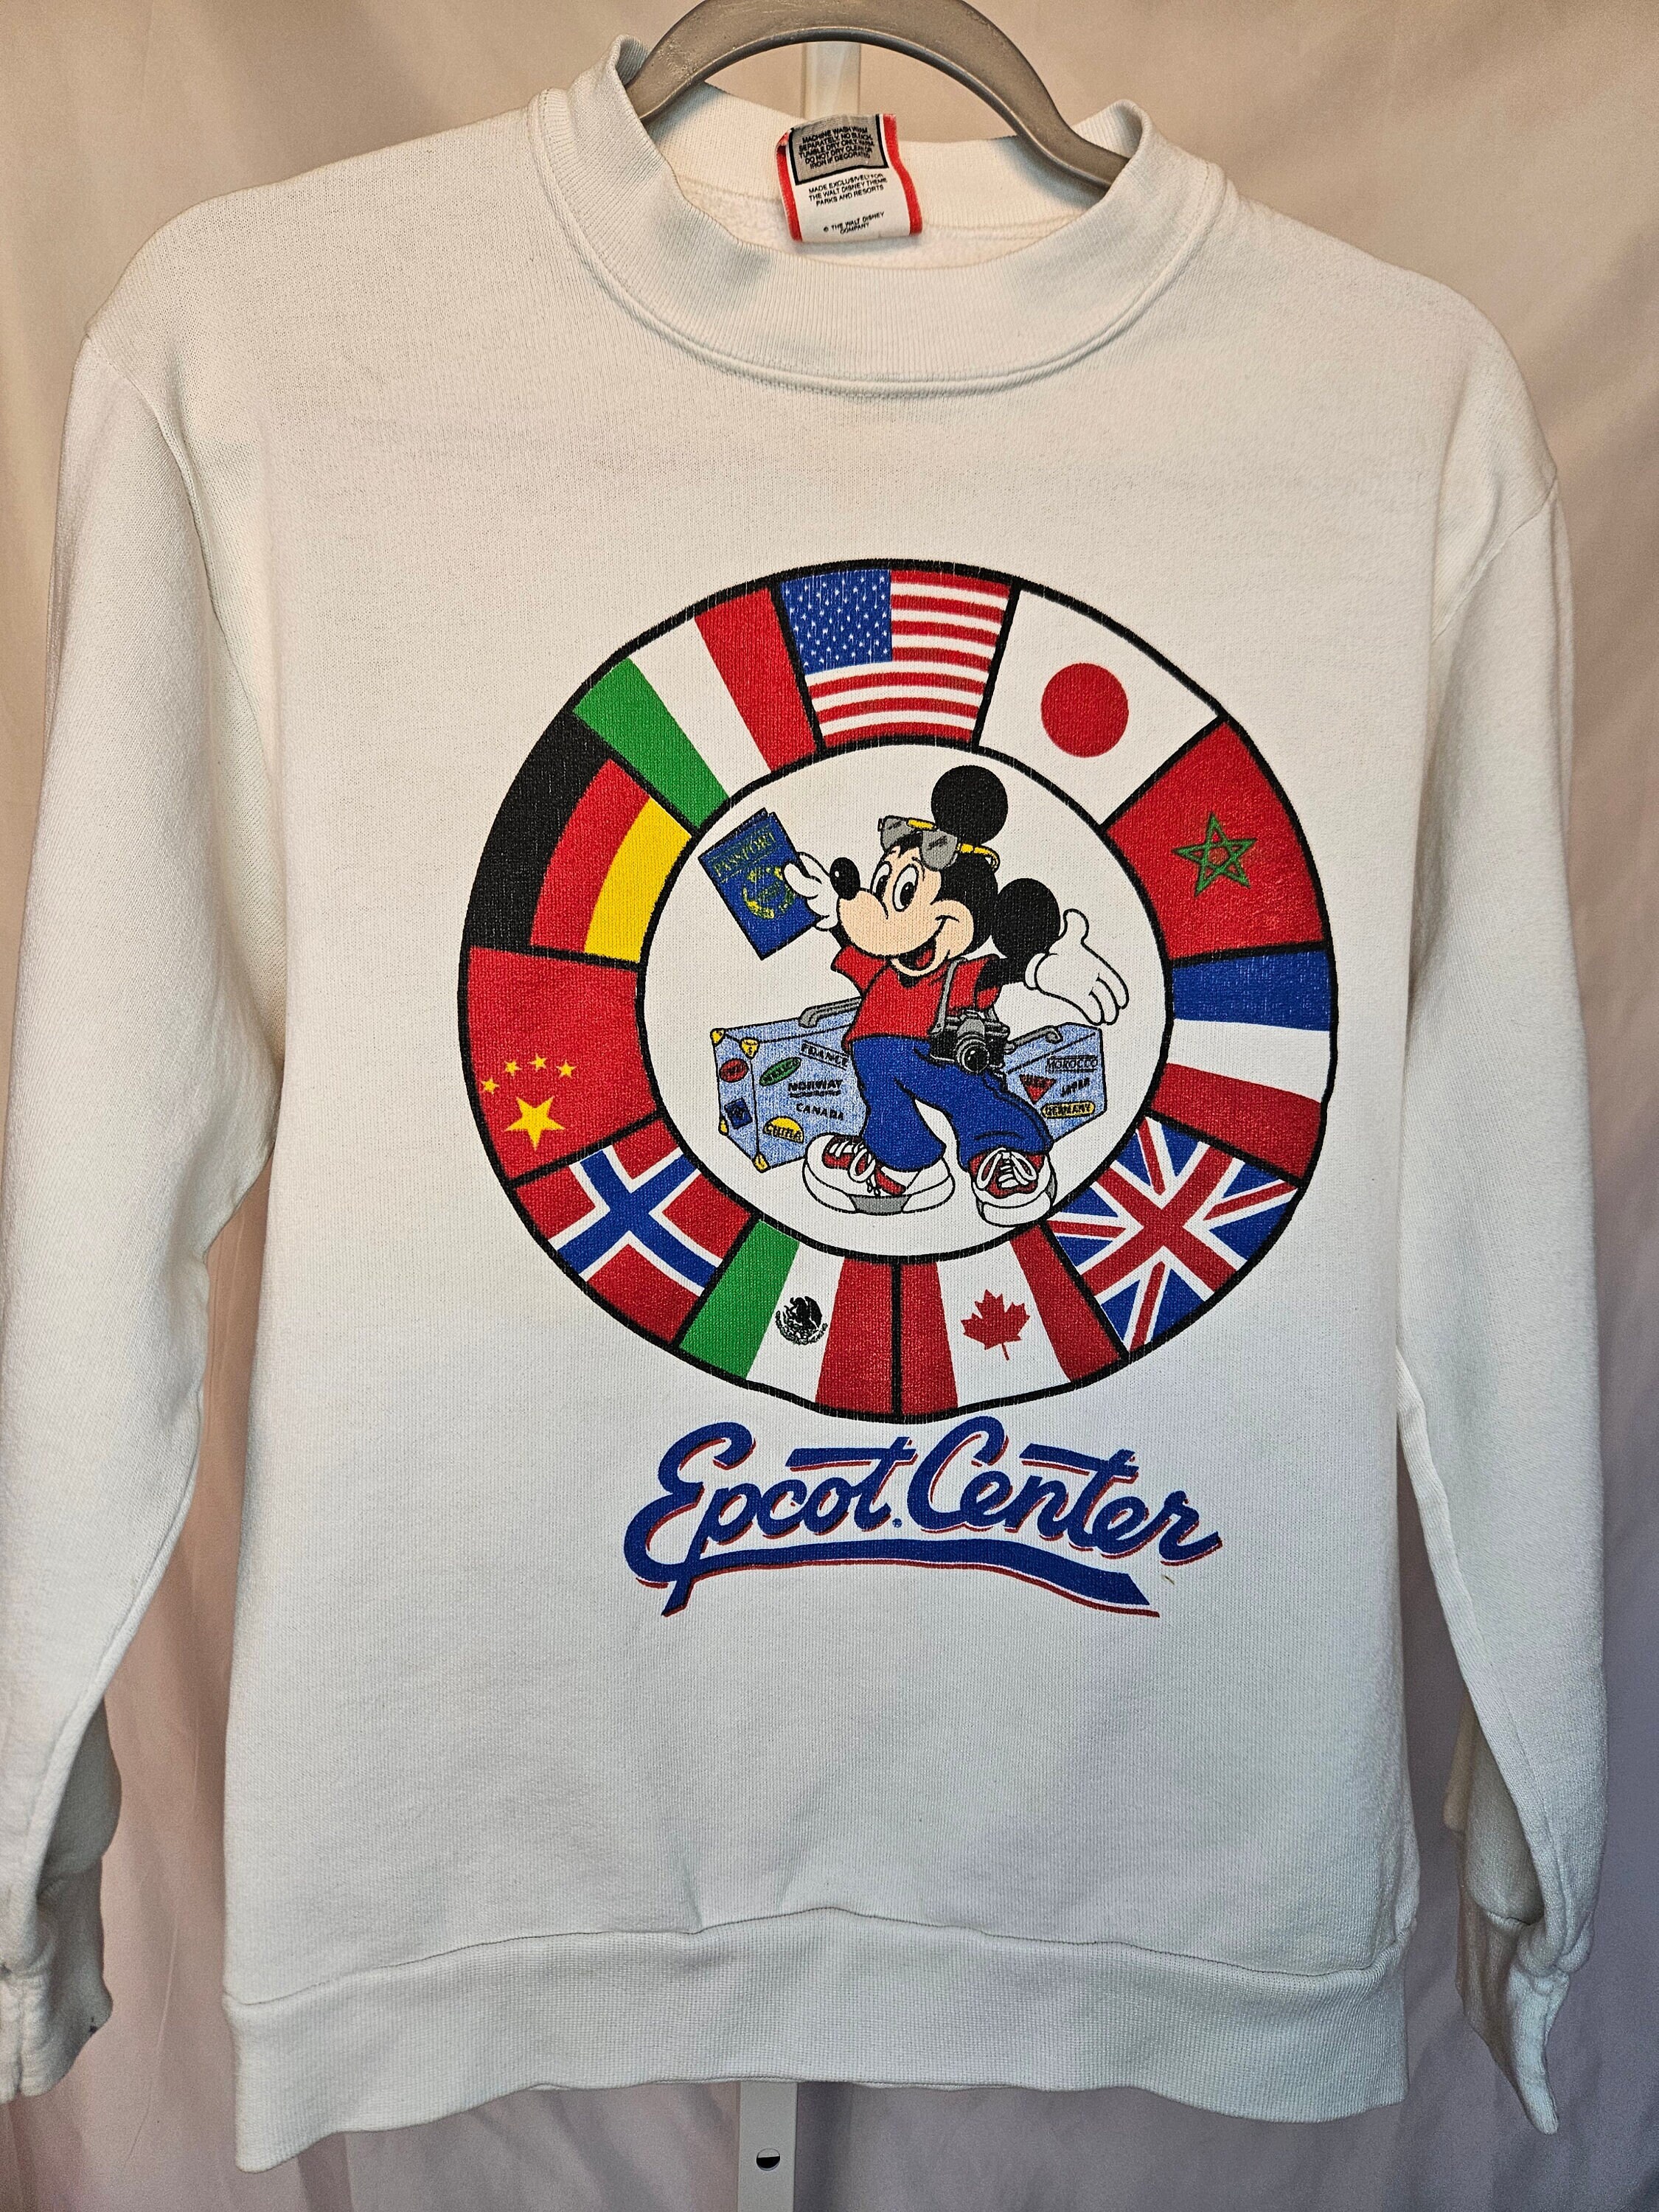 Vintage Epcot Center Sweatshirt 